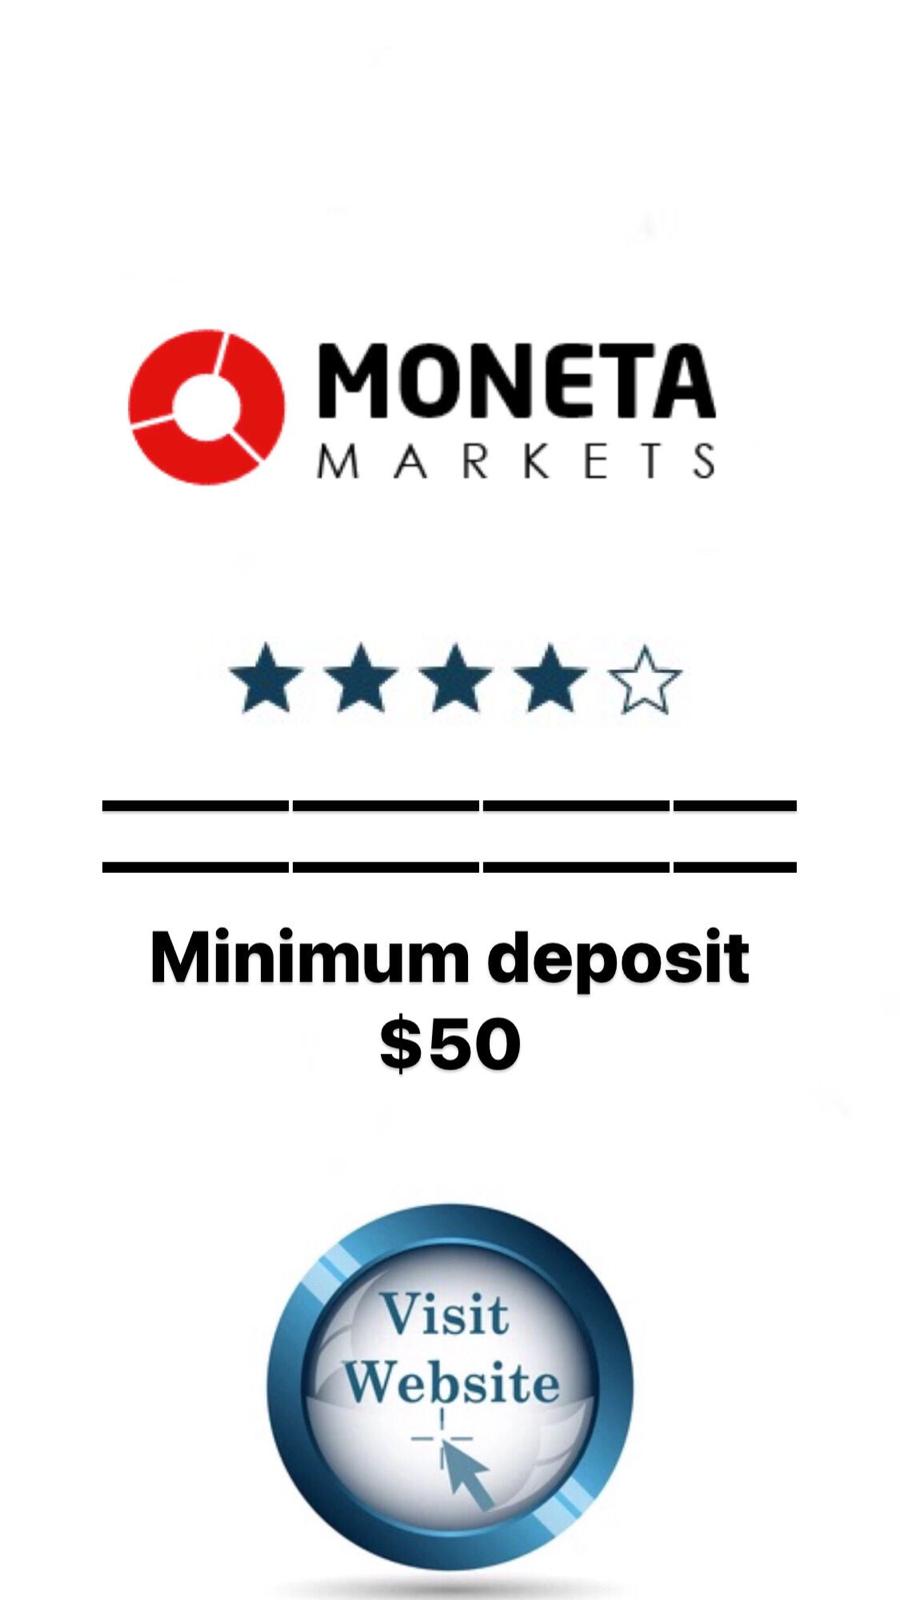 MONETA Markets